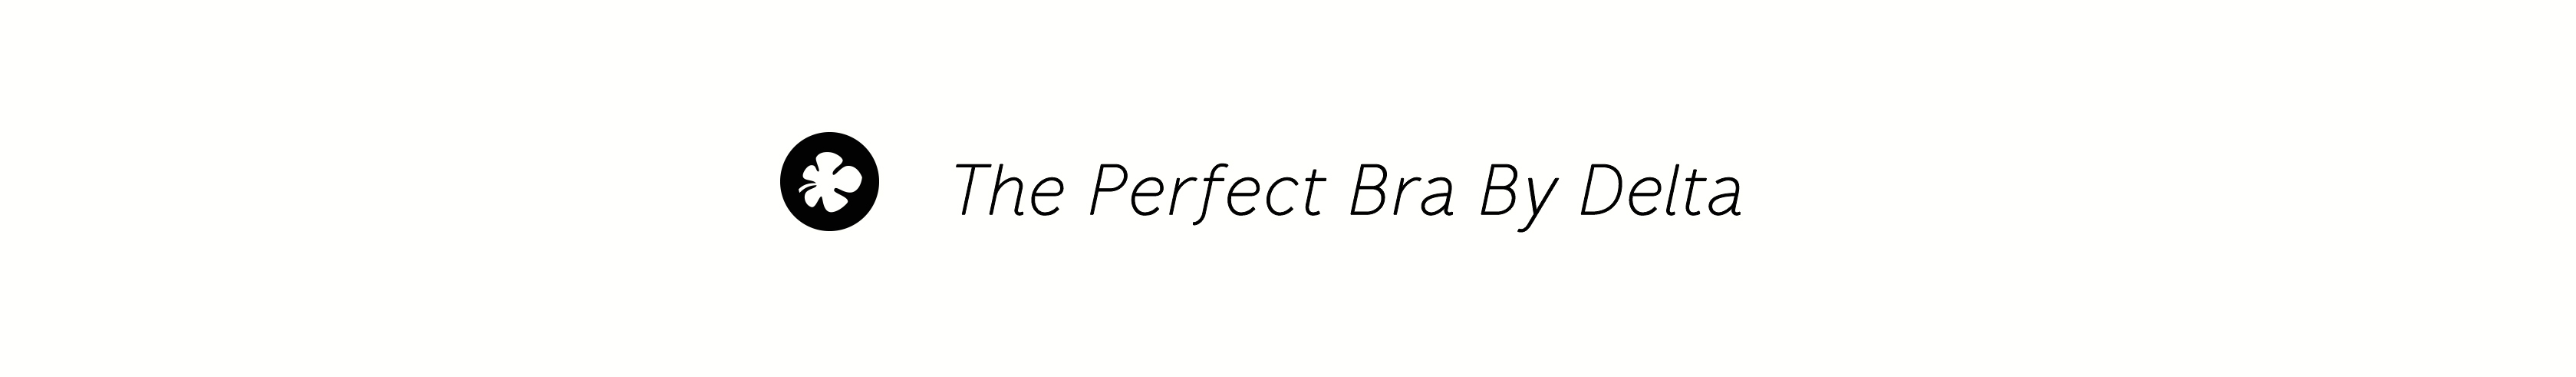 The Perfect Bra By Delta